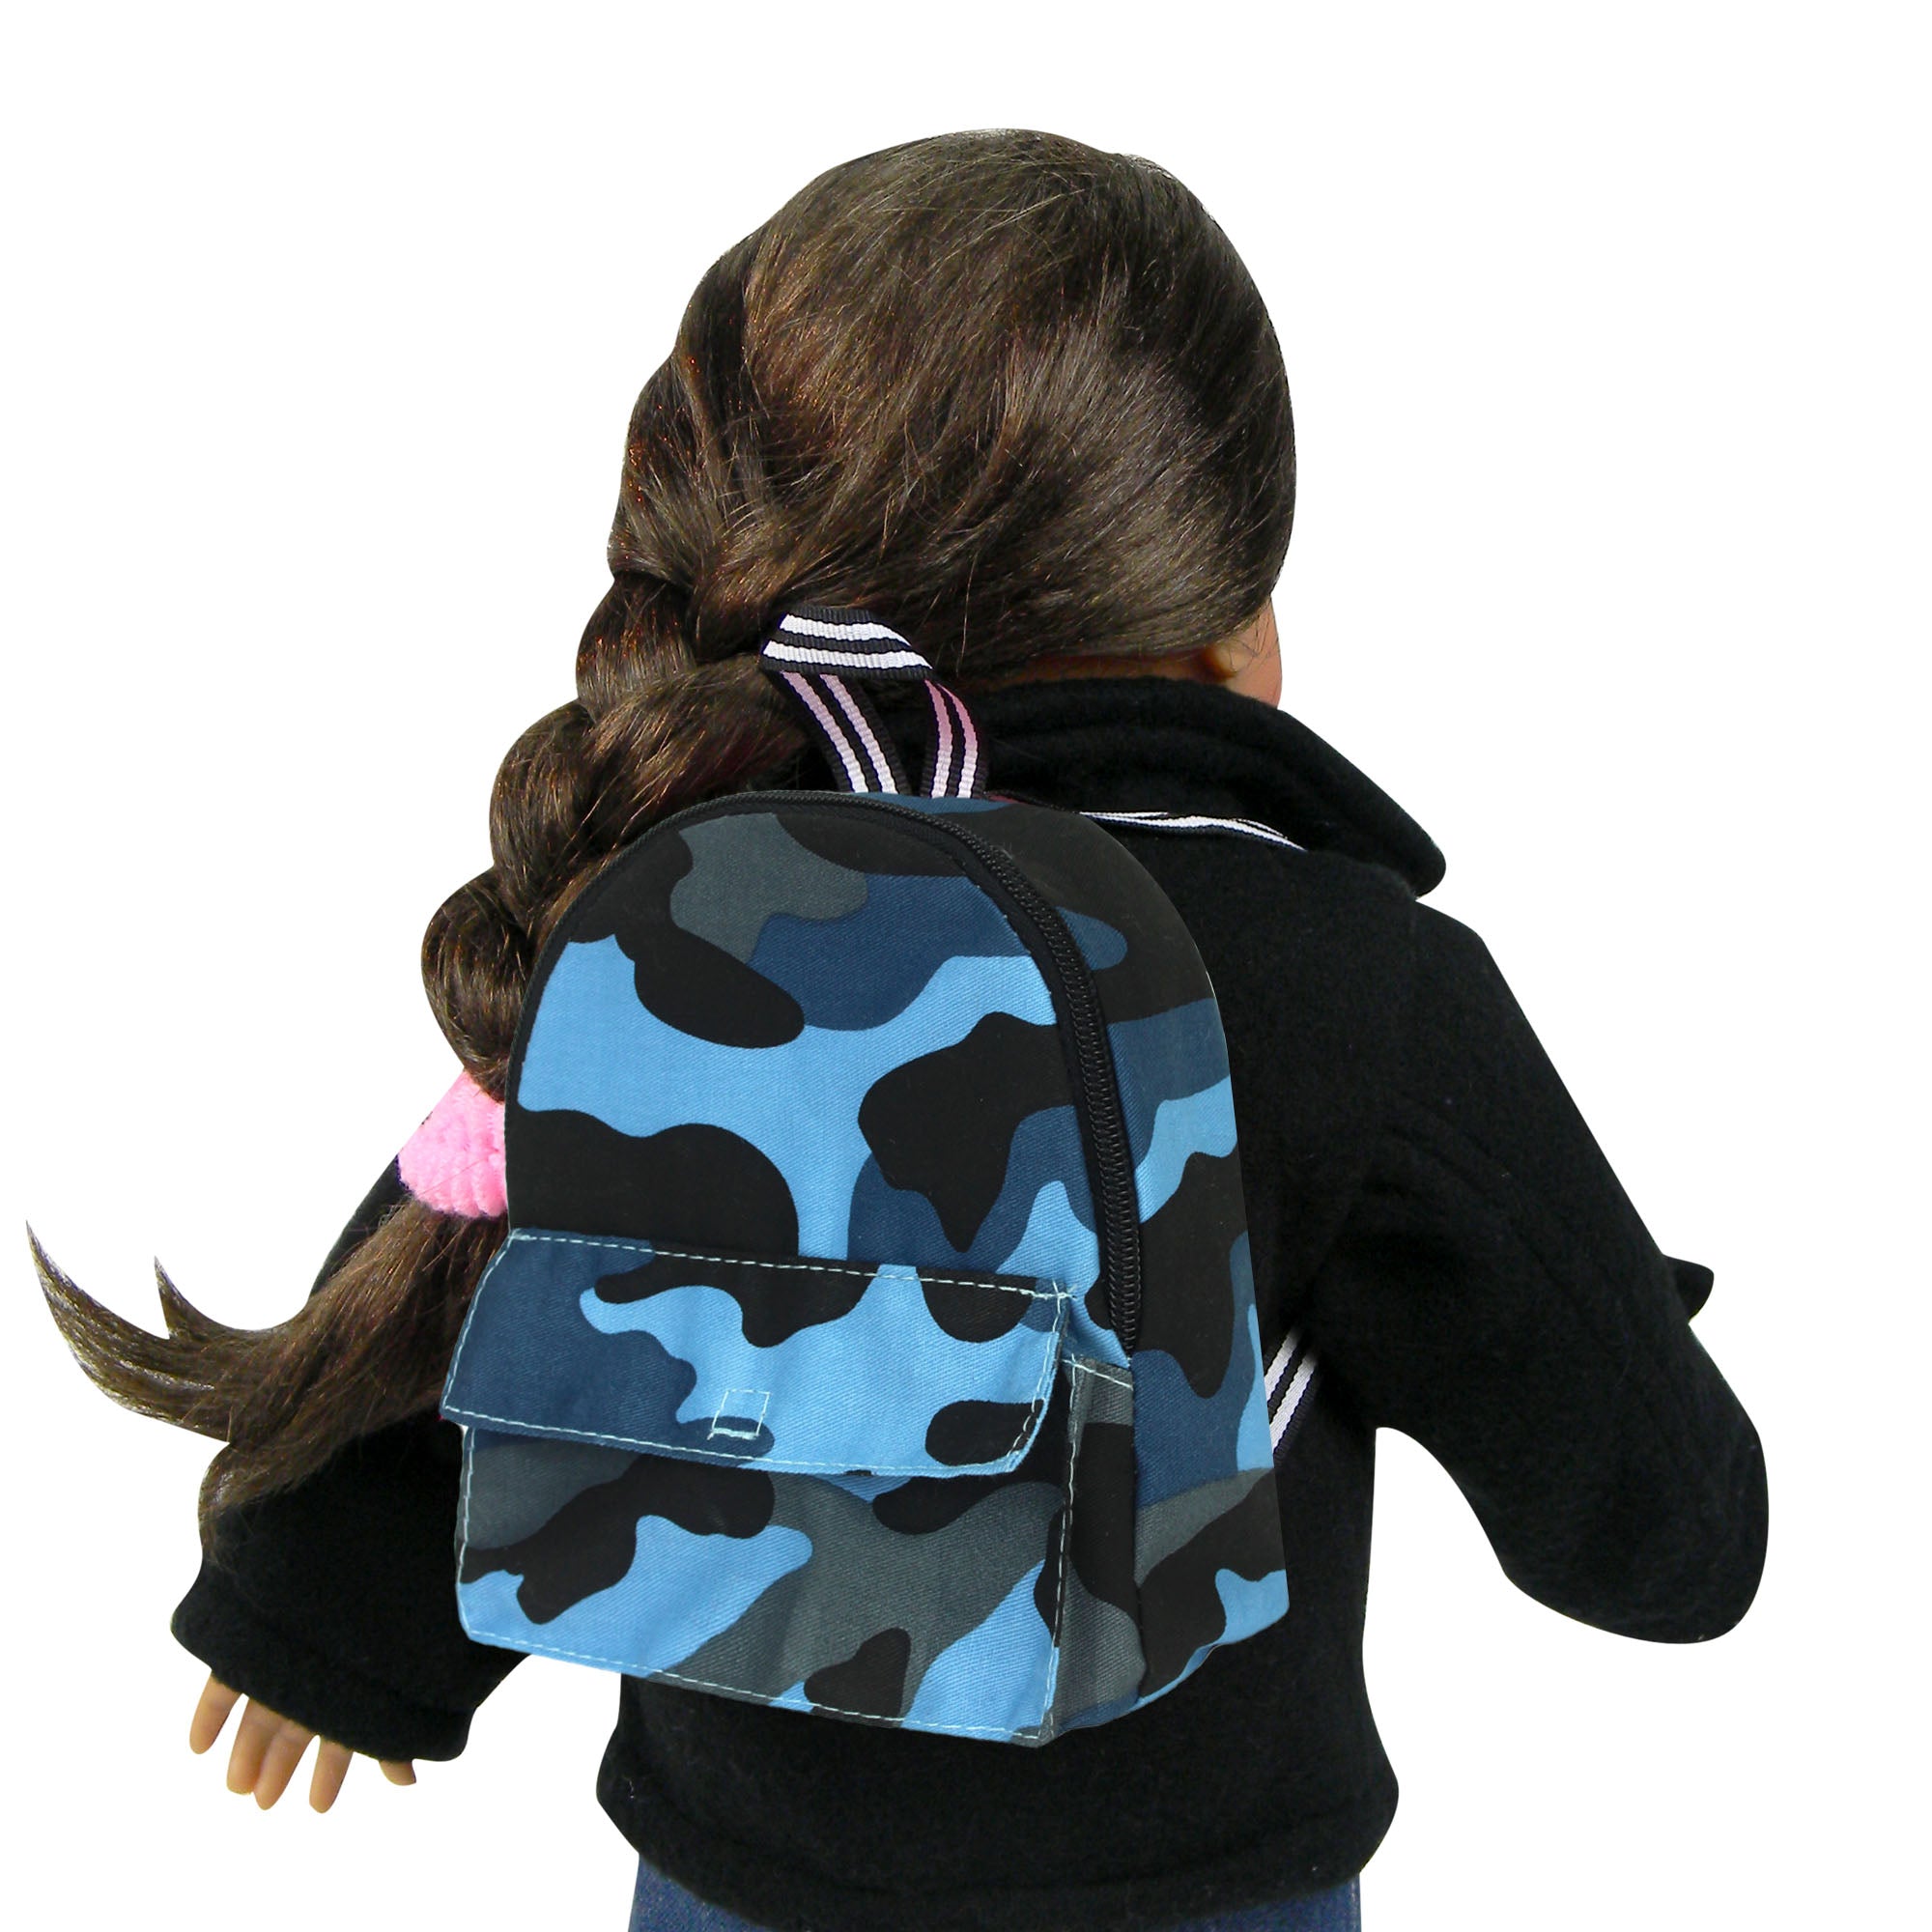 Sophia's - 18" Doll - Camouflage Nylon Backpack - Blue